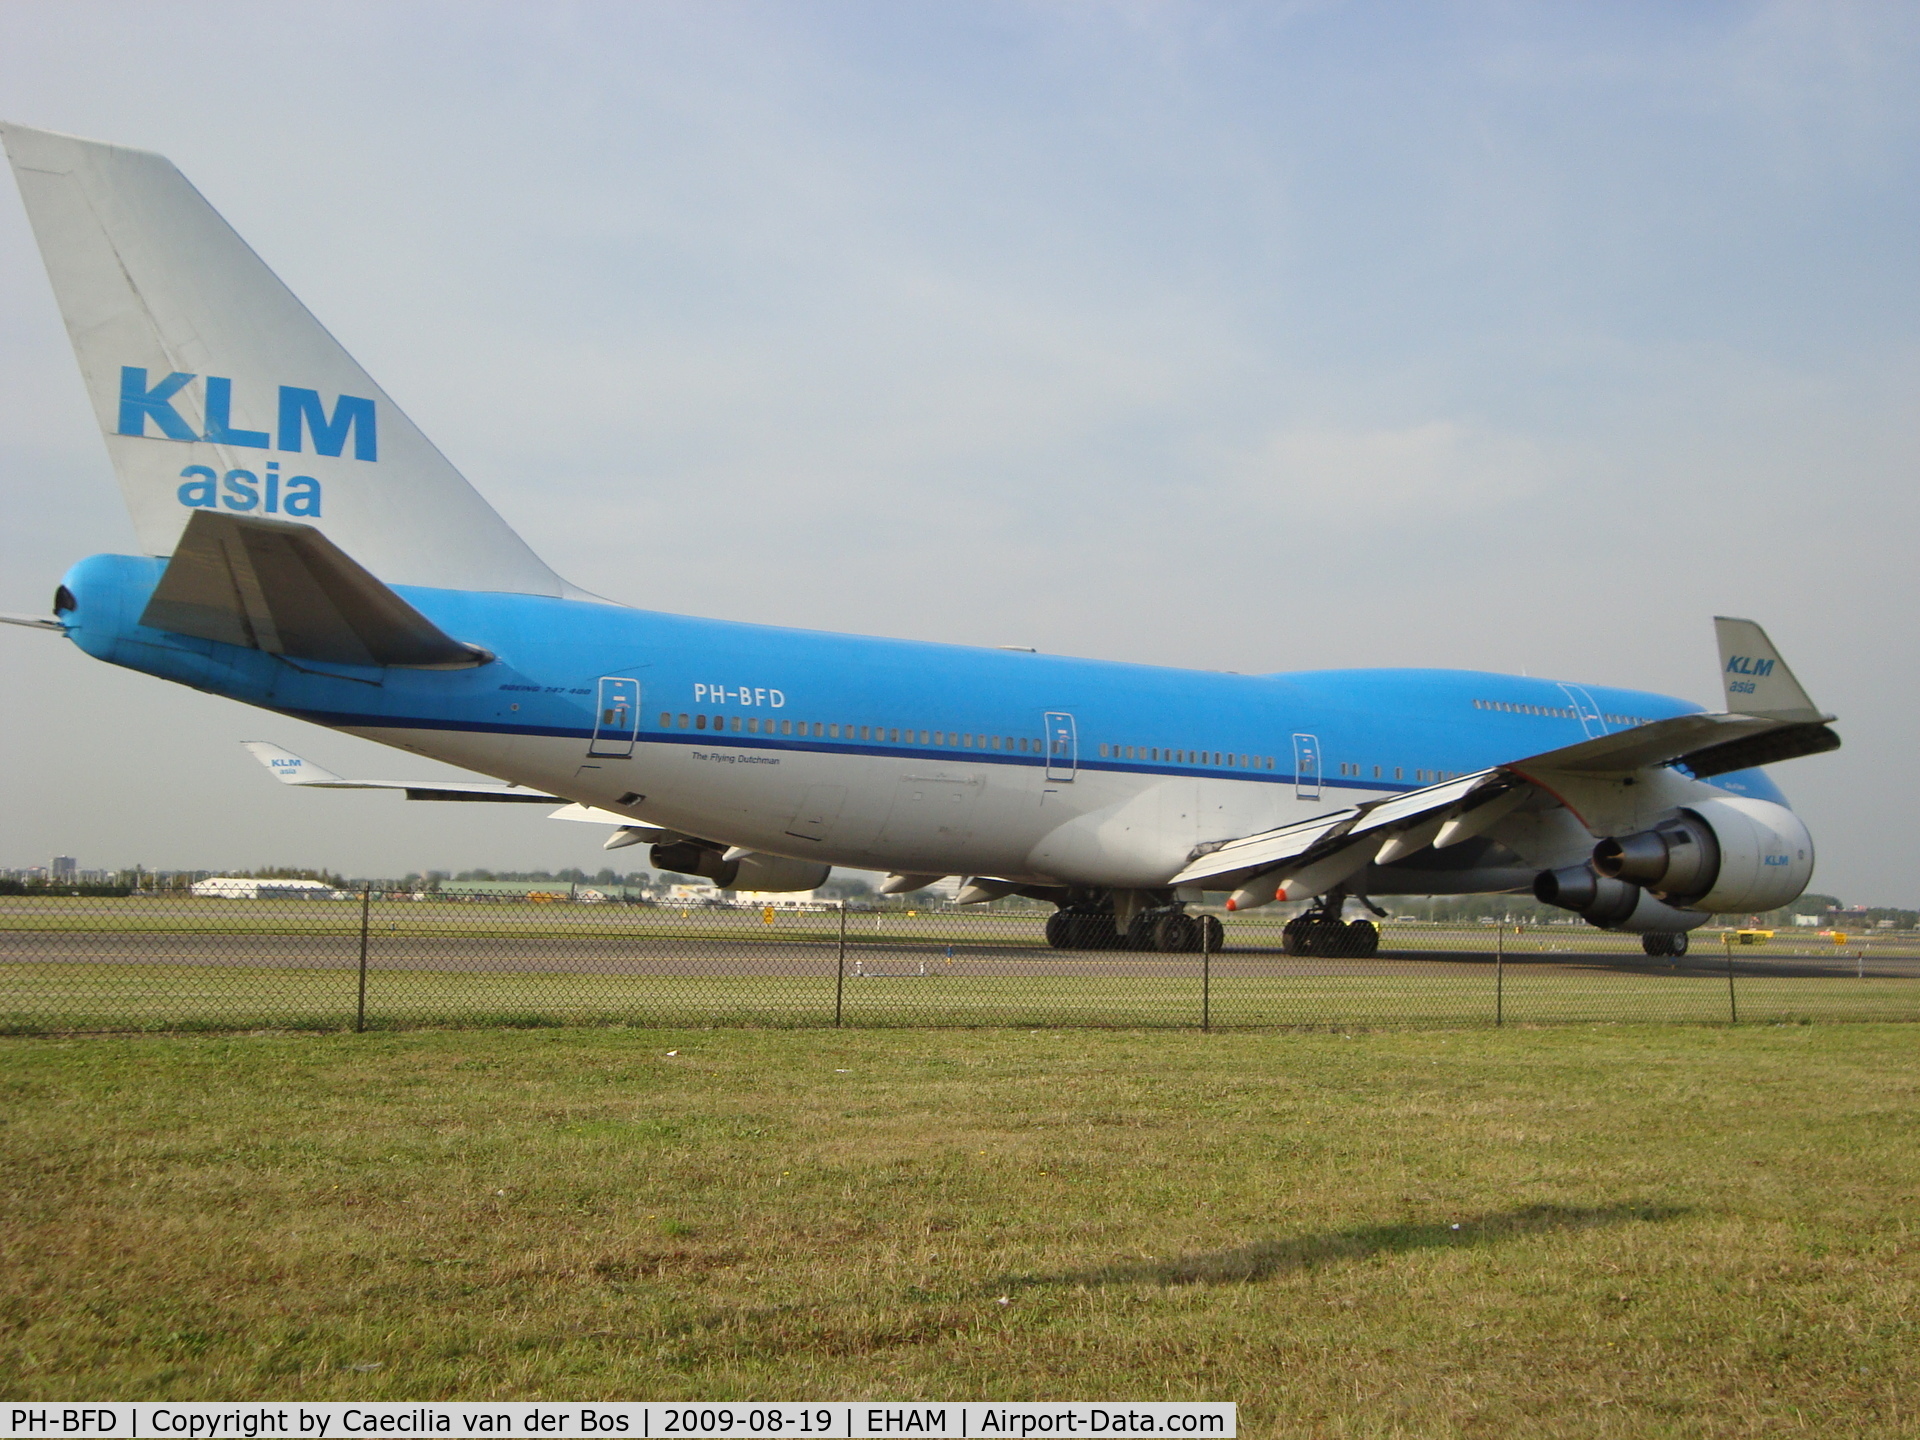 PH-BFD, 1989 Boeing 747-406BC C/N 24001, KLM Asia